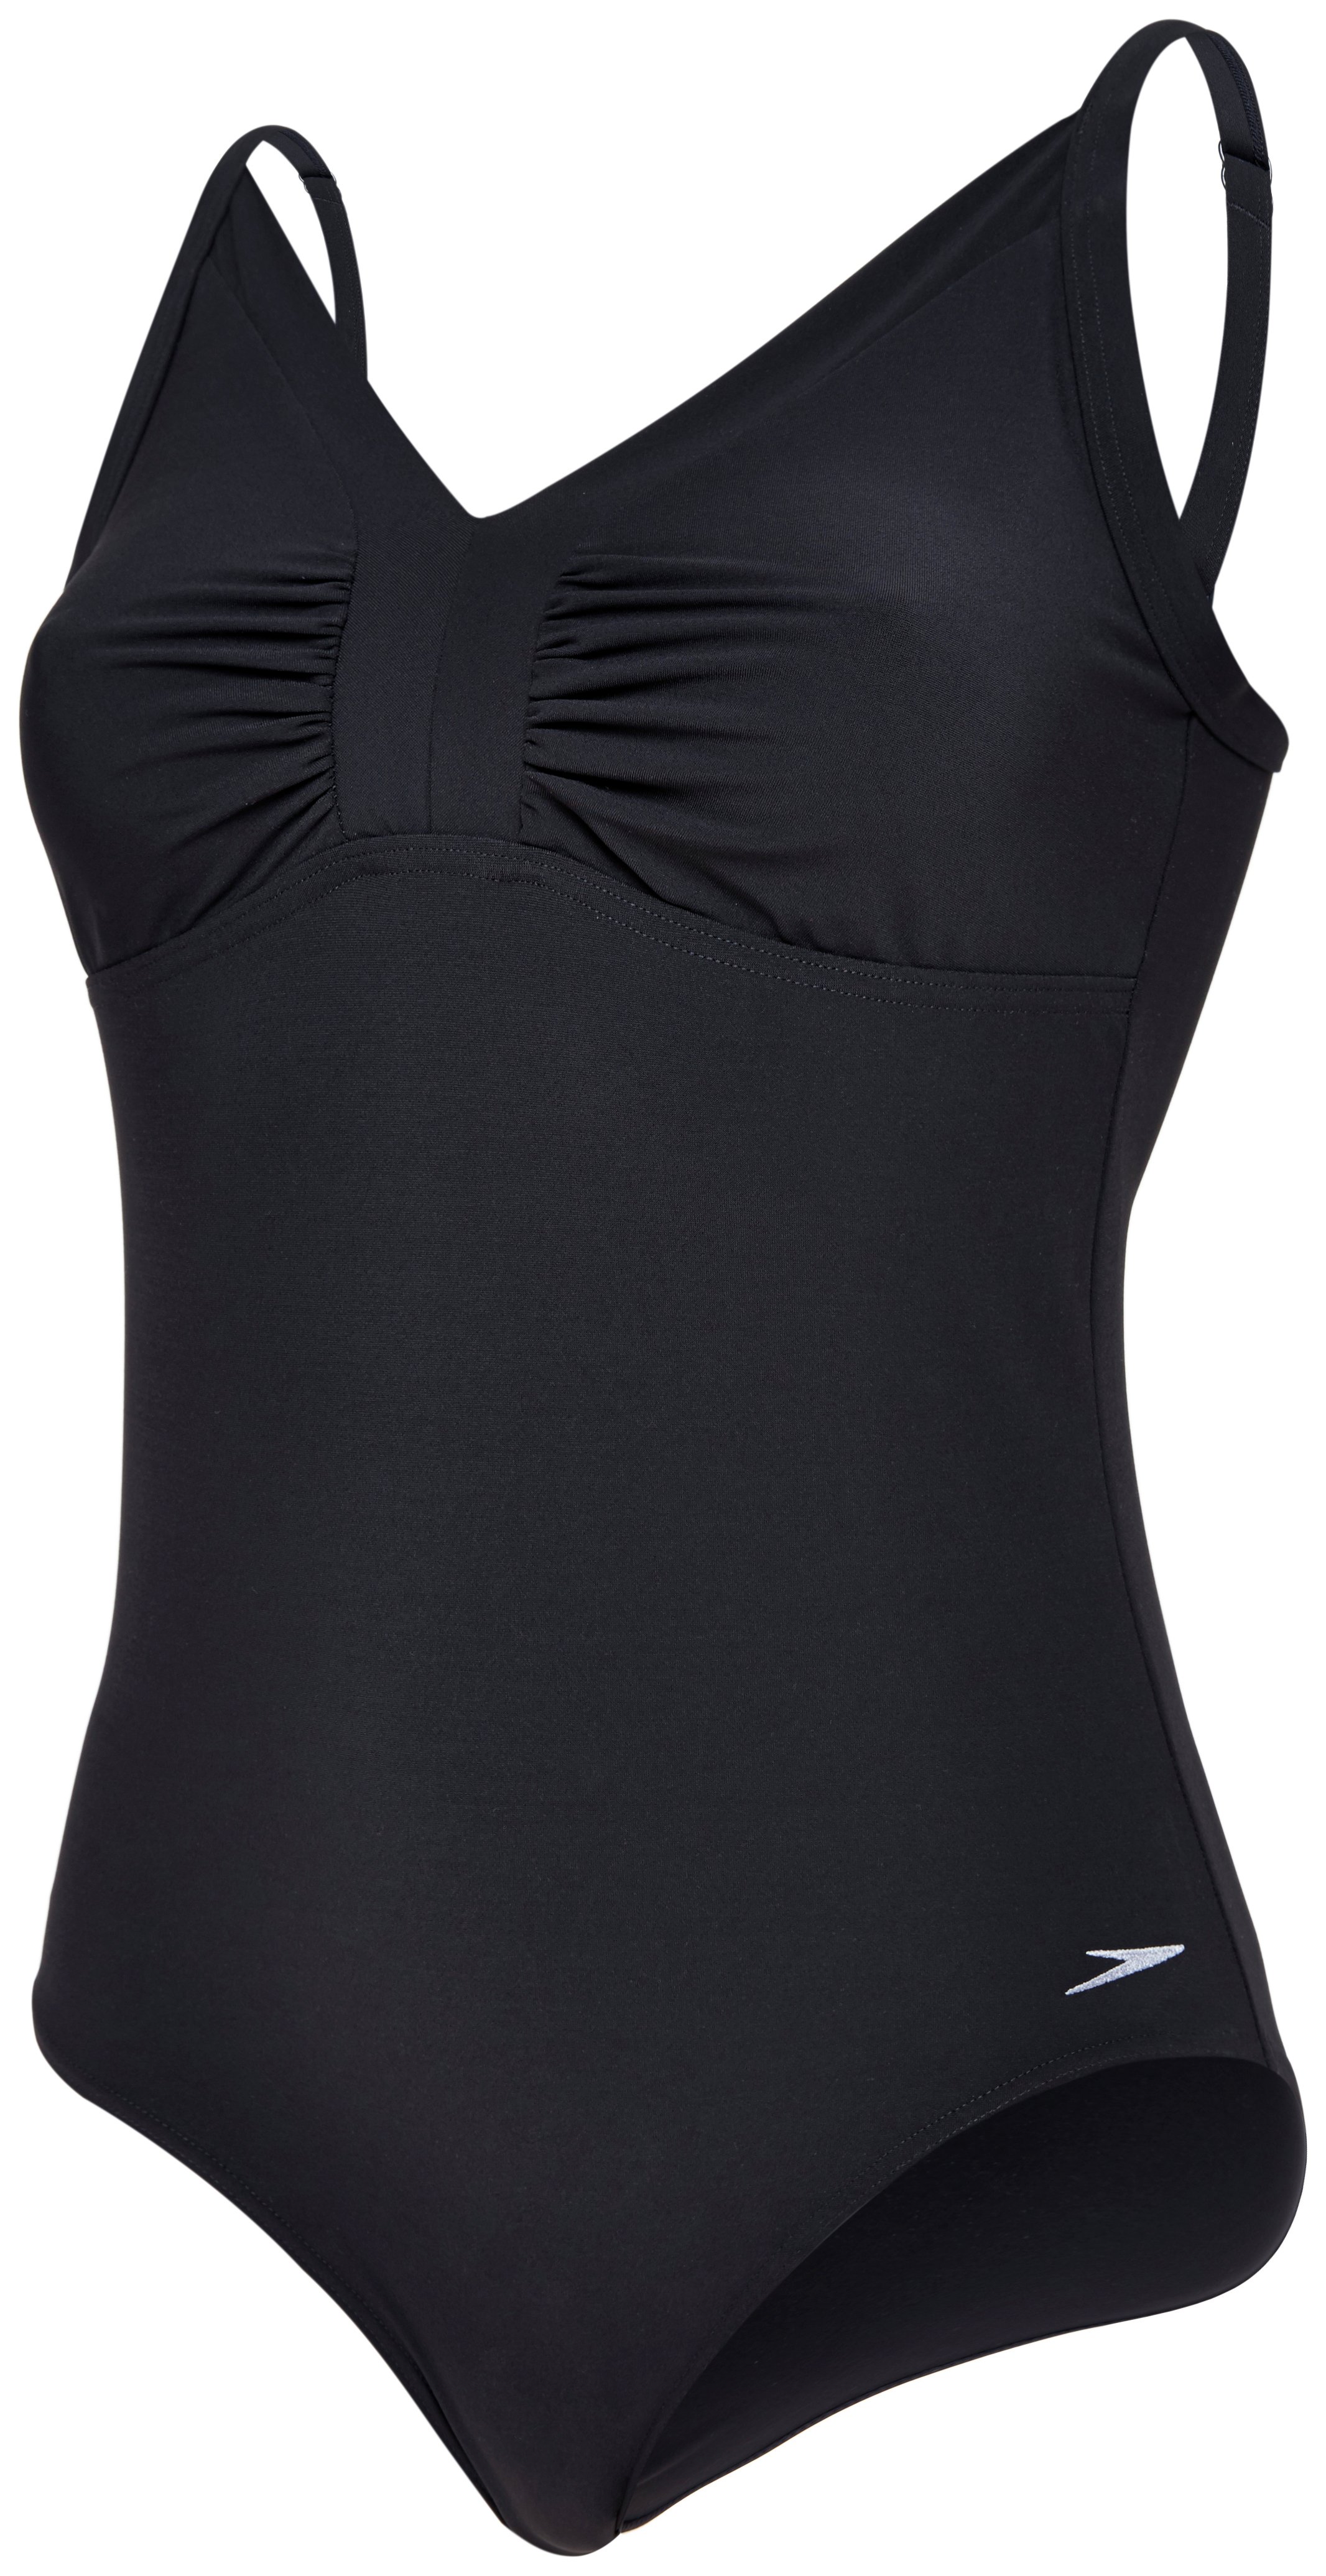 Speedo - Watergem Size 12 Adjustable Swimsuit Review